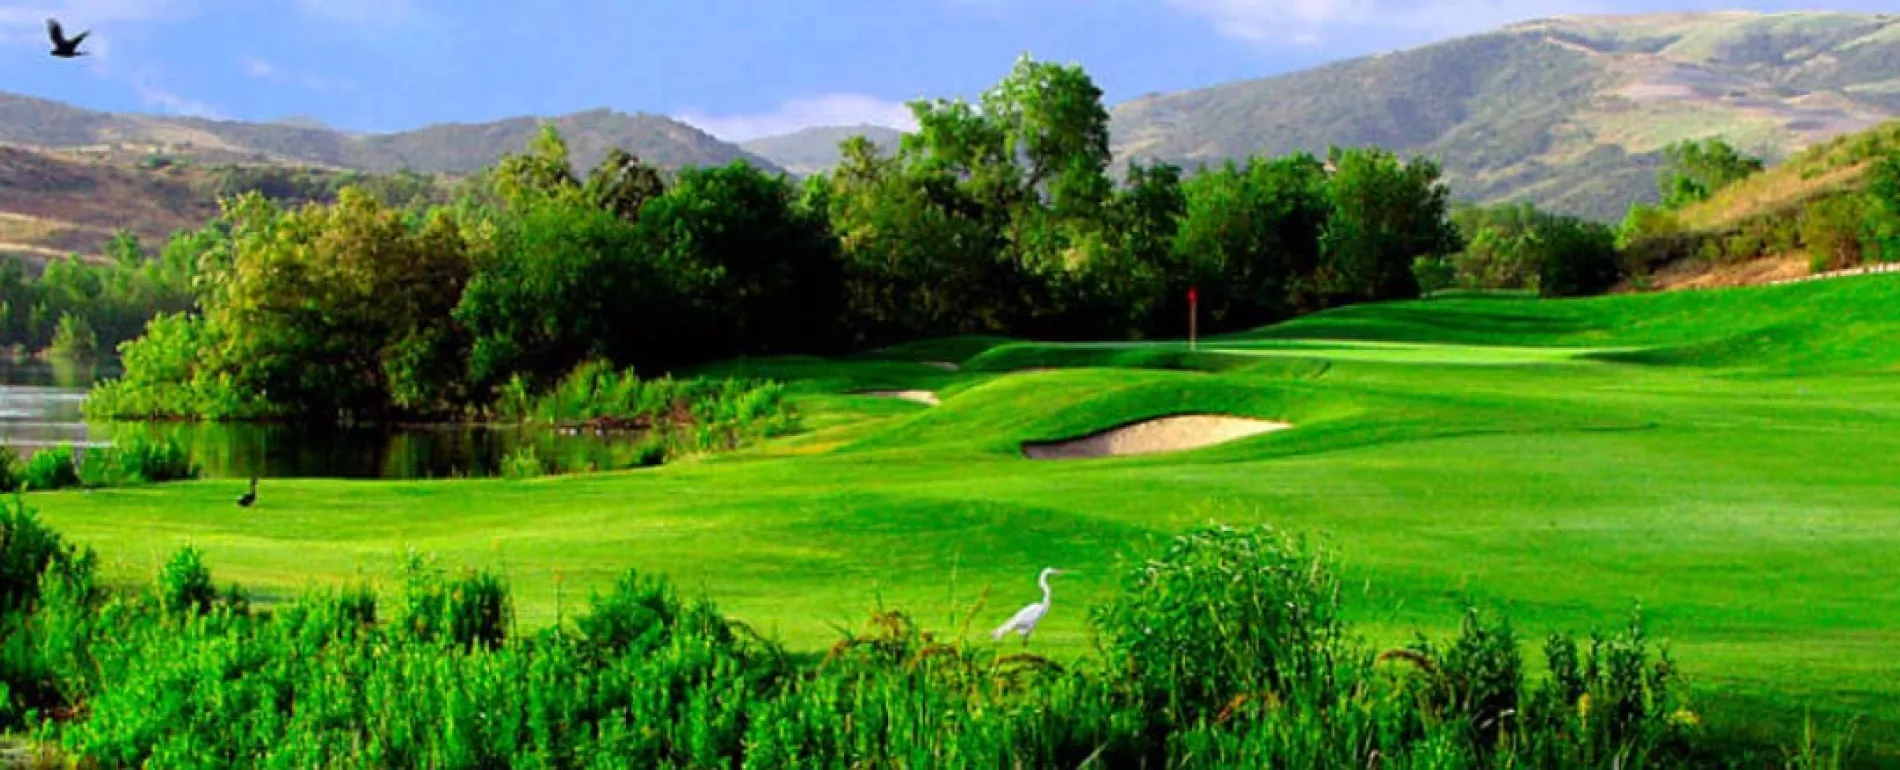  Golf Tournament at Strawberry Farms Golf Club in Irvine